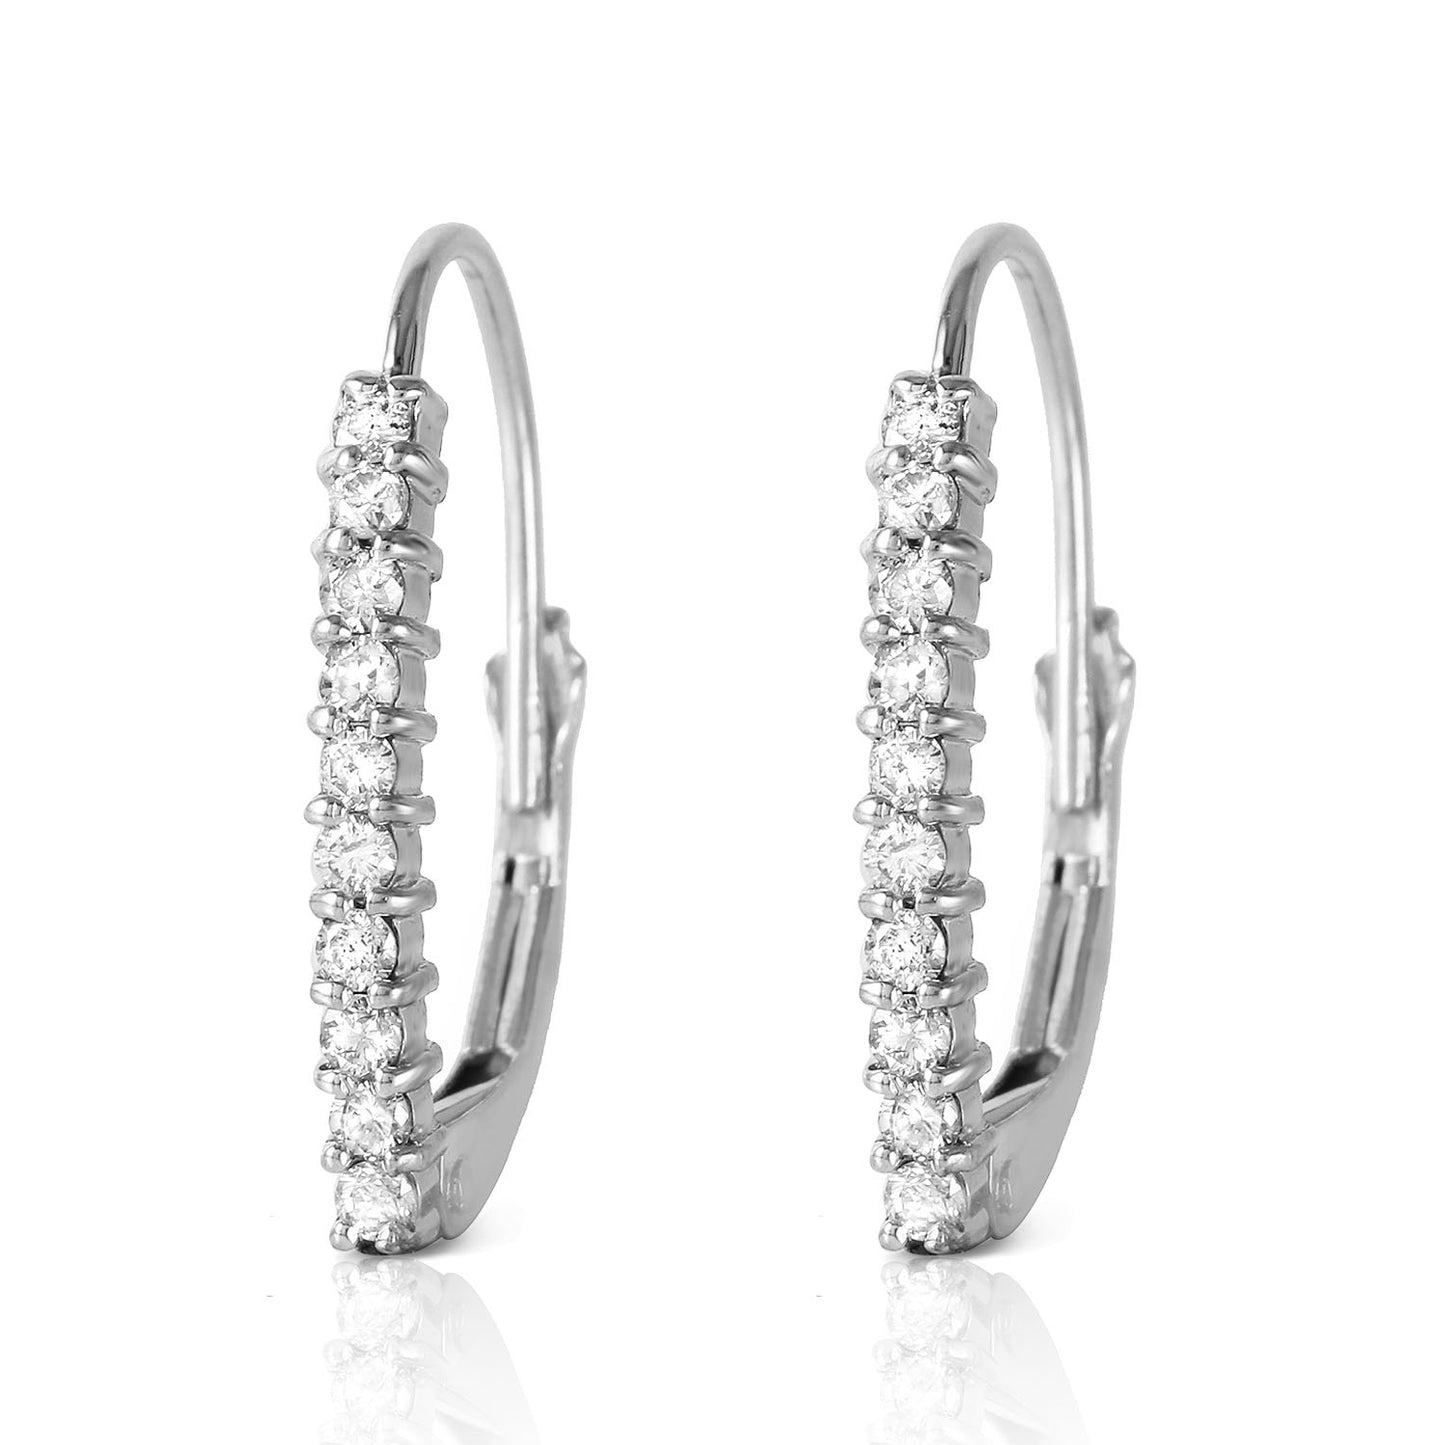 Leverback Earrings Natural Diamond